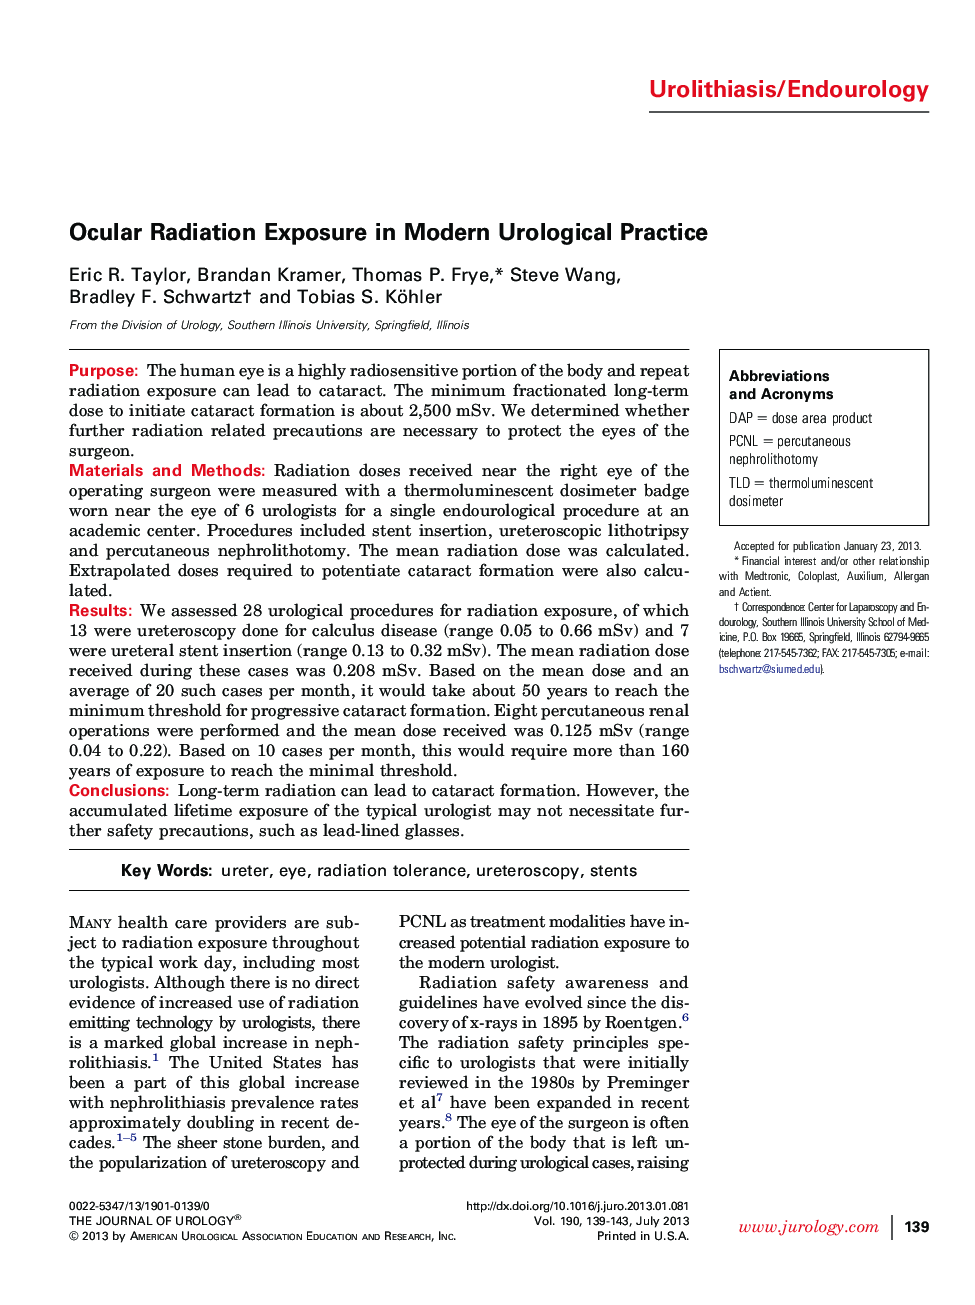 Ocular Radiation Exposure in Modern Urological Practice